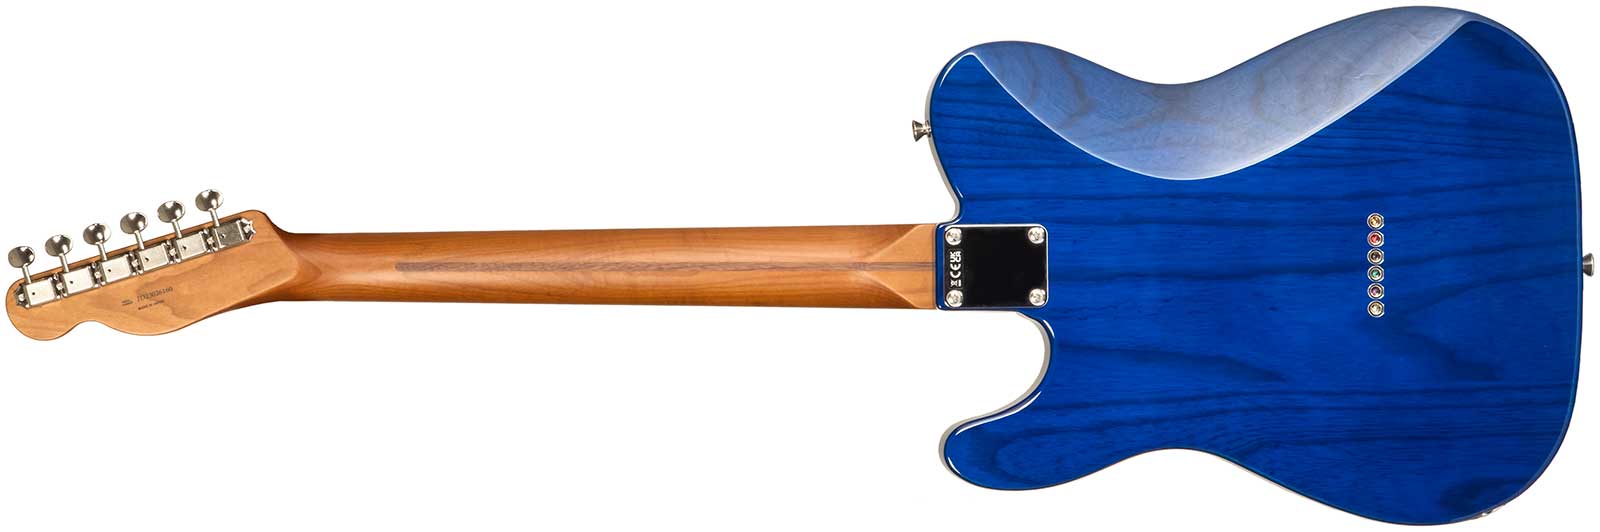 Fender Tele Hybrid Ii Jap 2s Ht Mn - Aqua Blue - Guitare Électrique Forme Tel - Variation 1